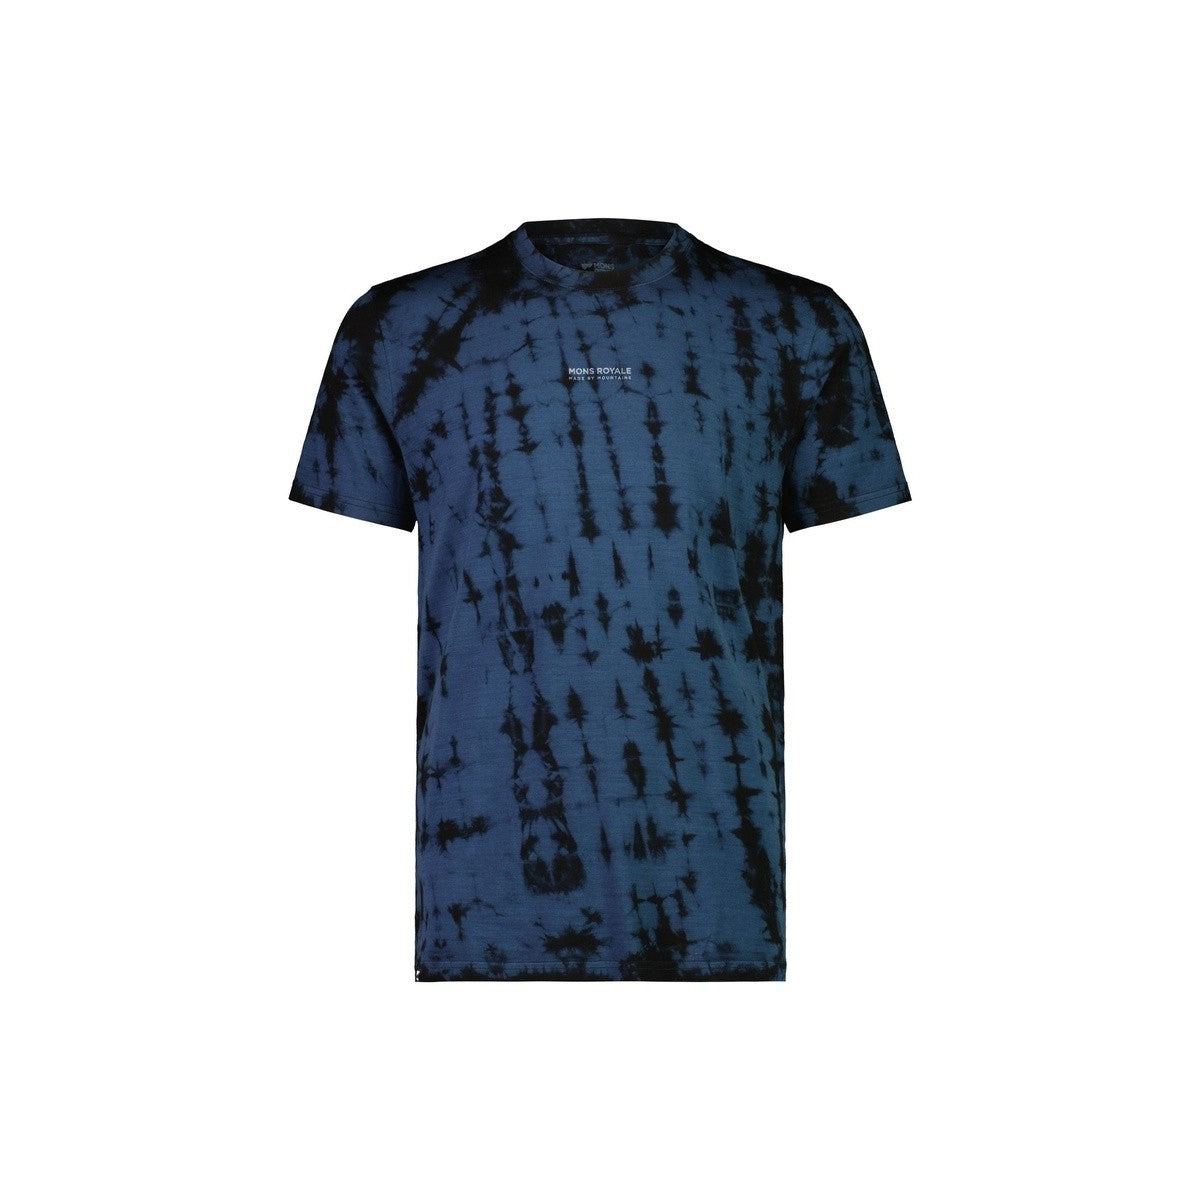 Mons Royale Men's Icon T-Shirt Garment Dyed - Ice Night Tie Dye